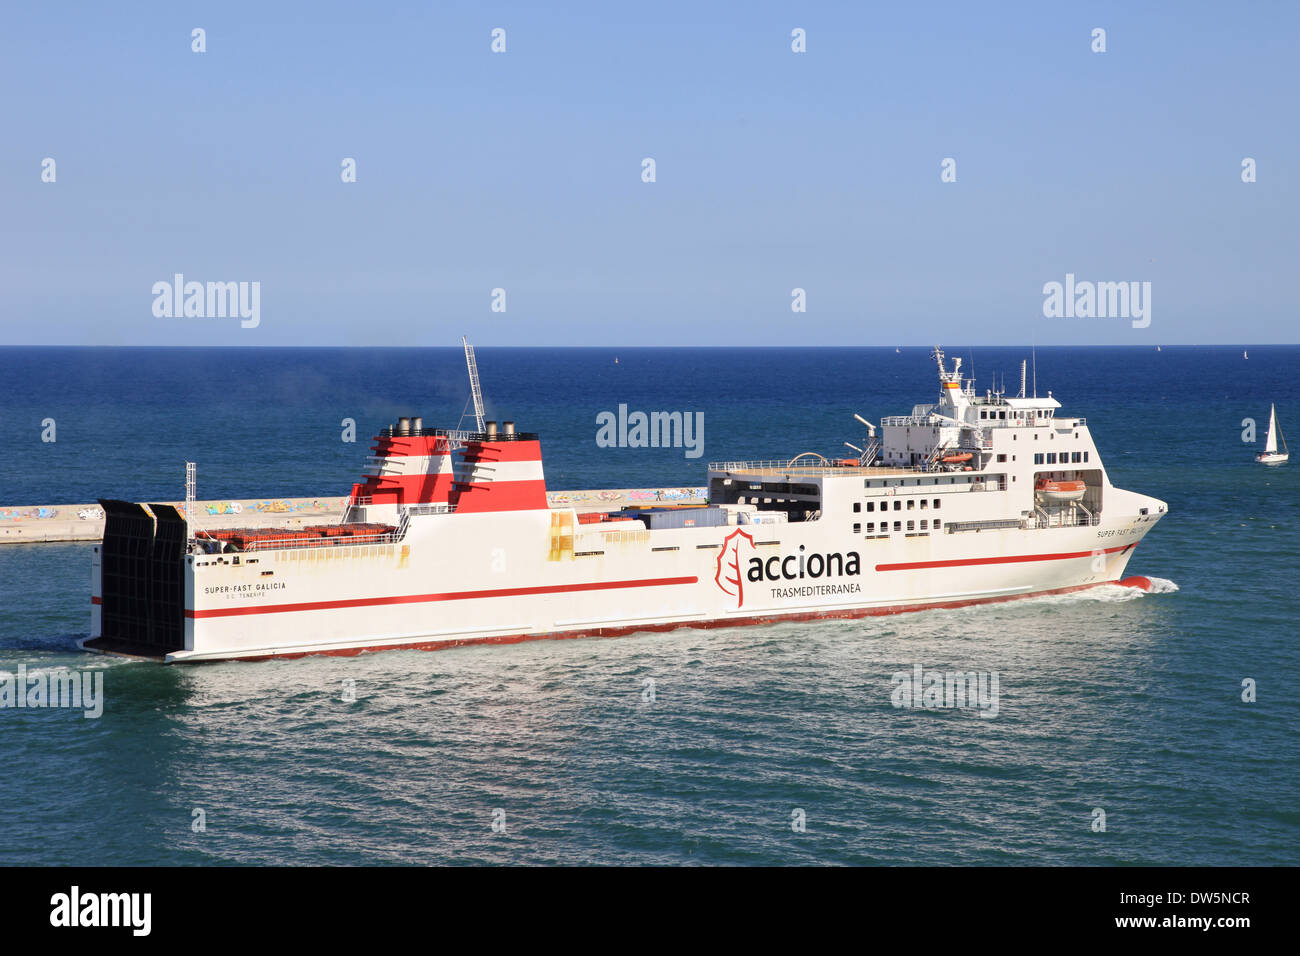 Acciona Line Ro-Ro Ferry ship Super Fast Galicia leaves Barcelona harbor Spain Stock Photo